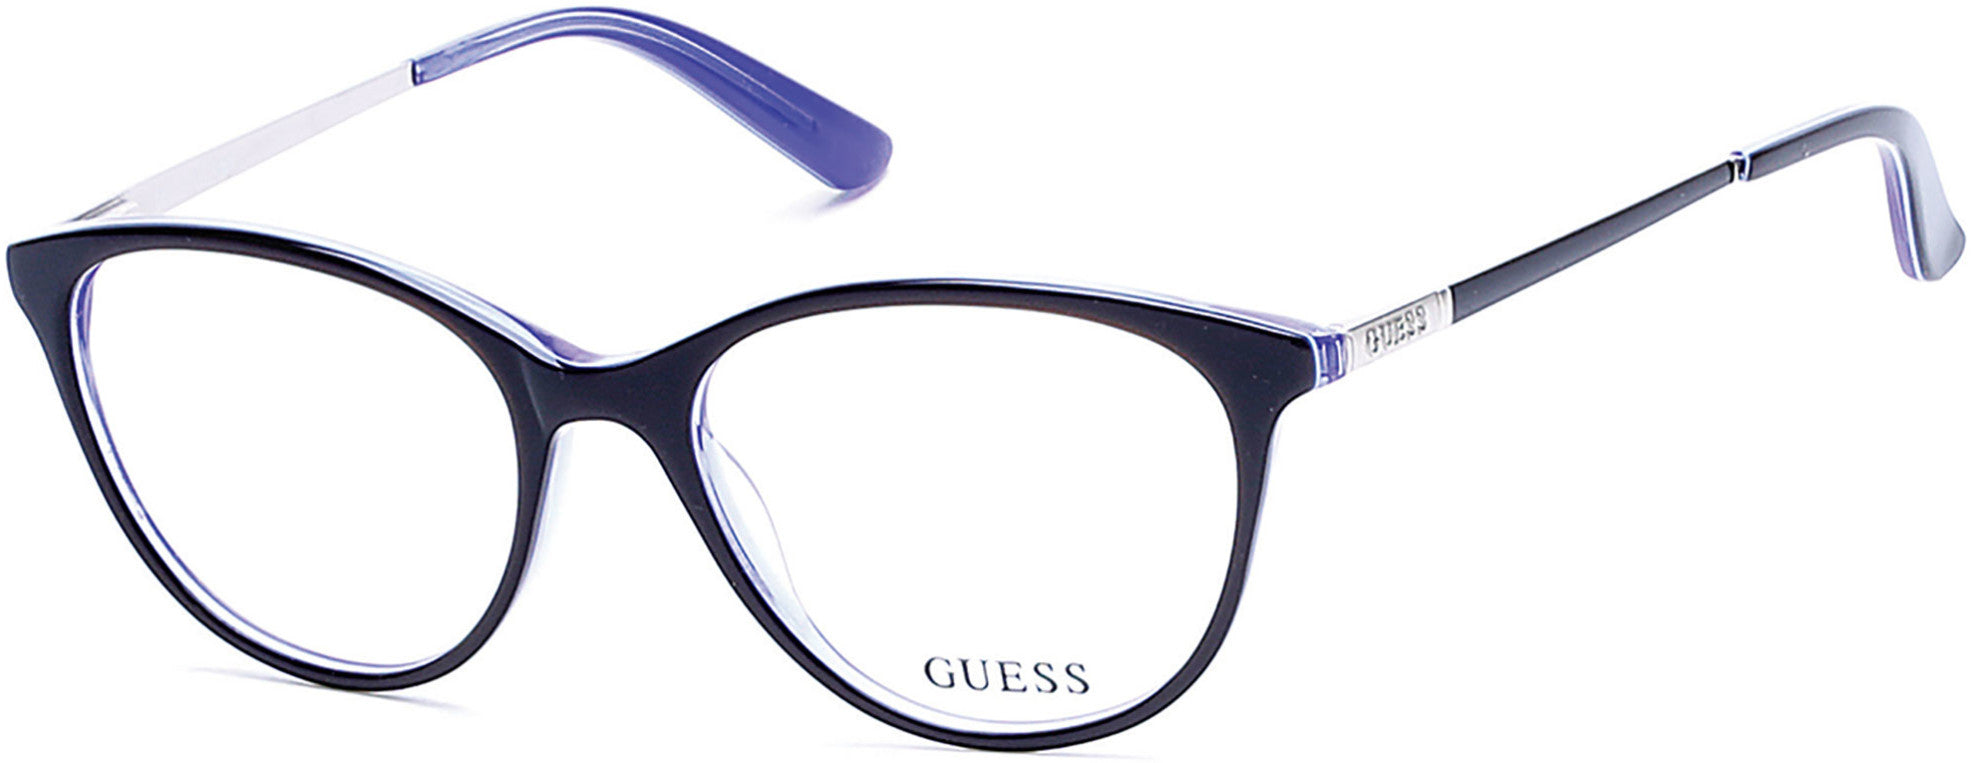 Guess GU2565 Cat Eyeglasses 001-001 - Shiny Black